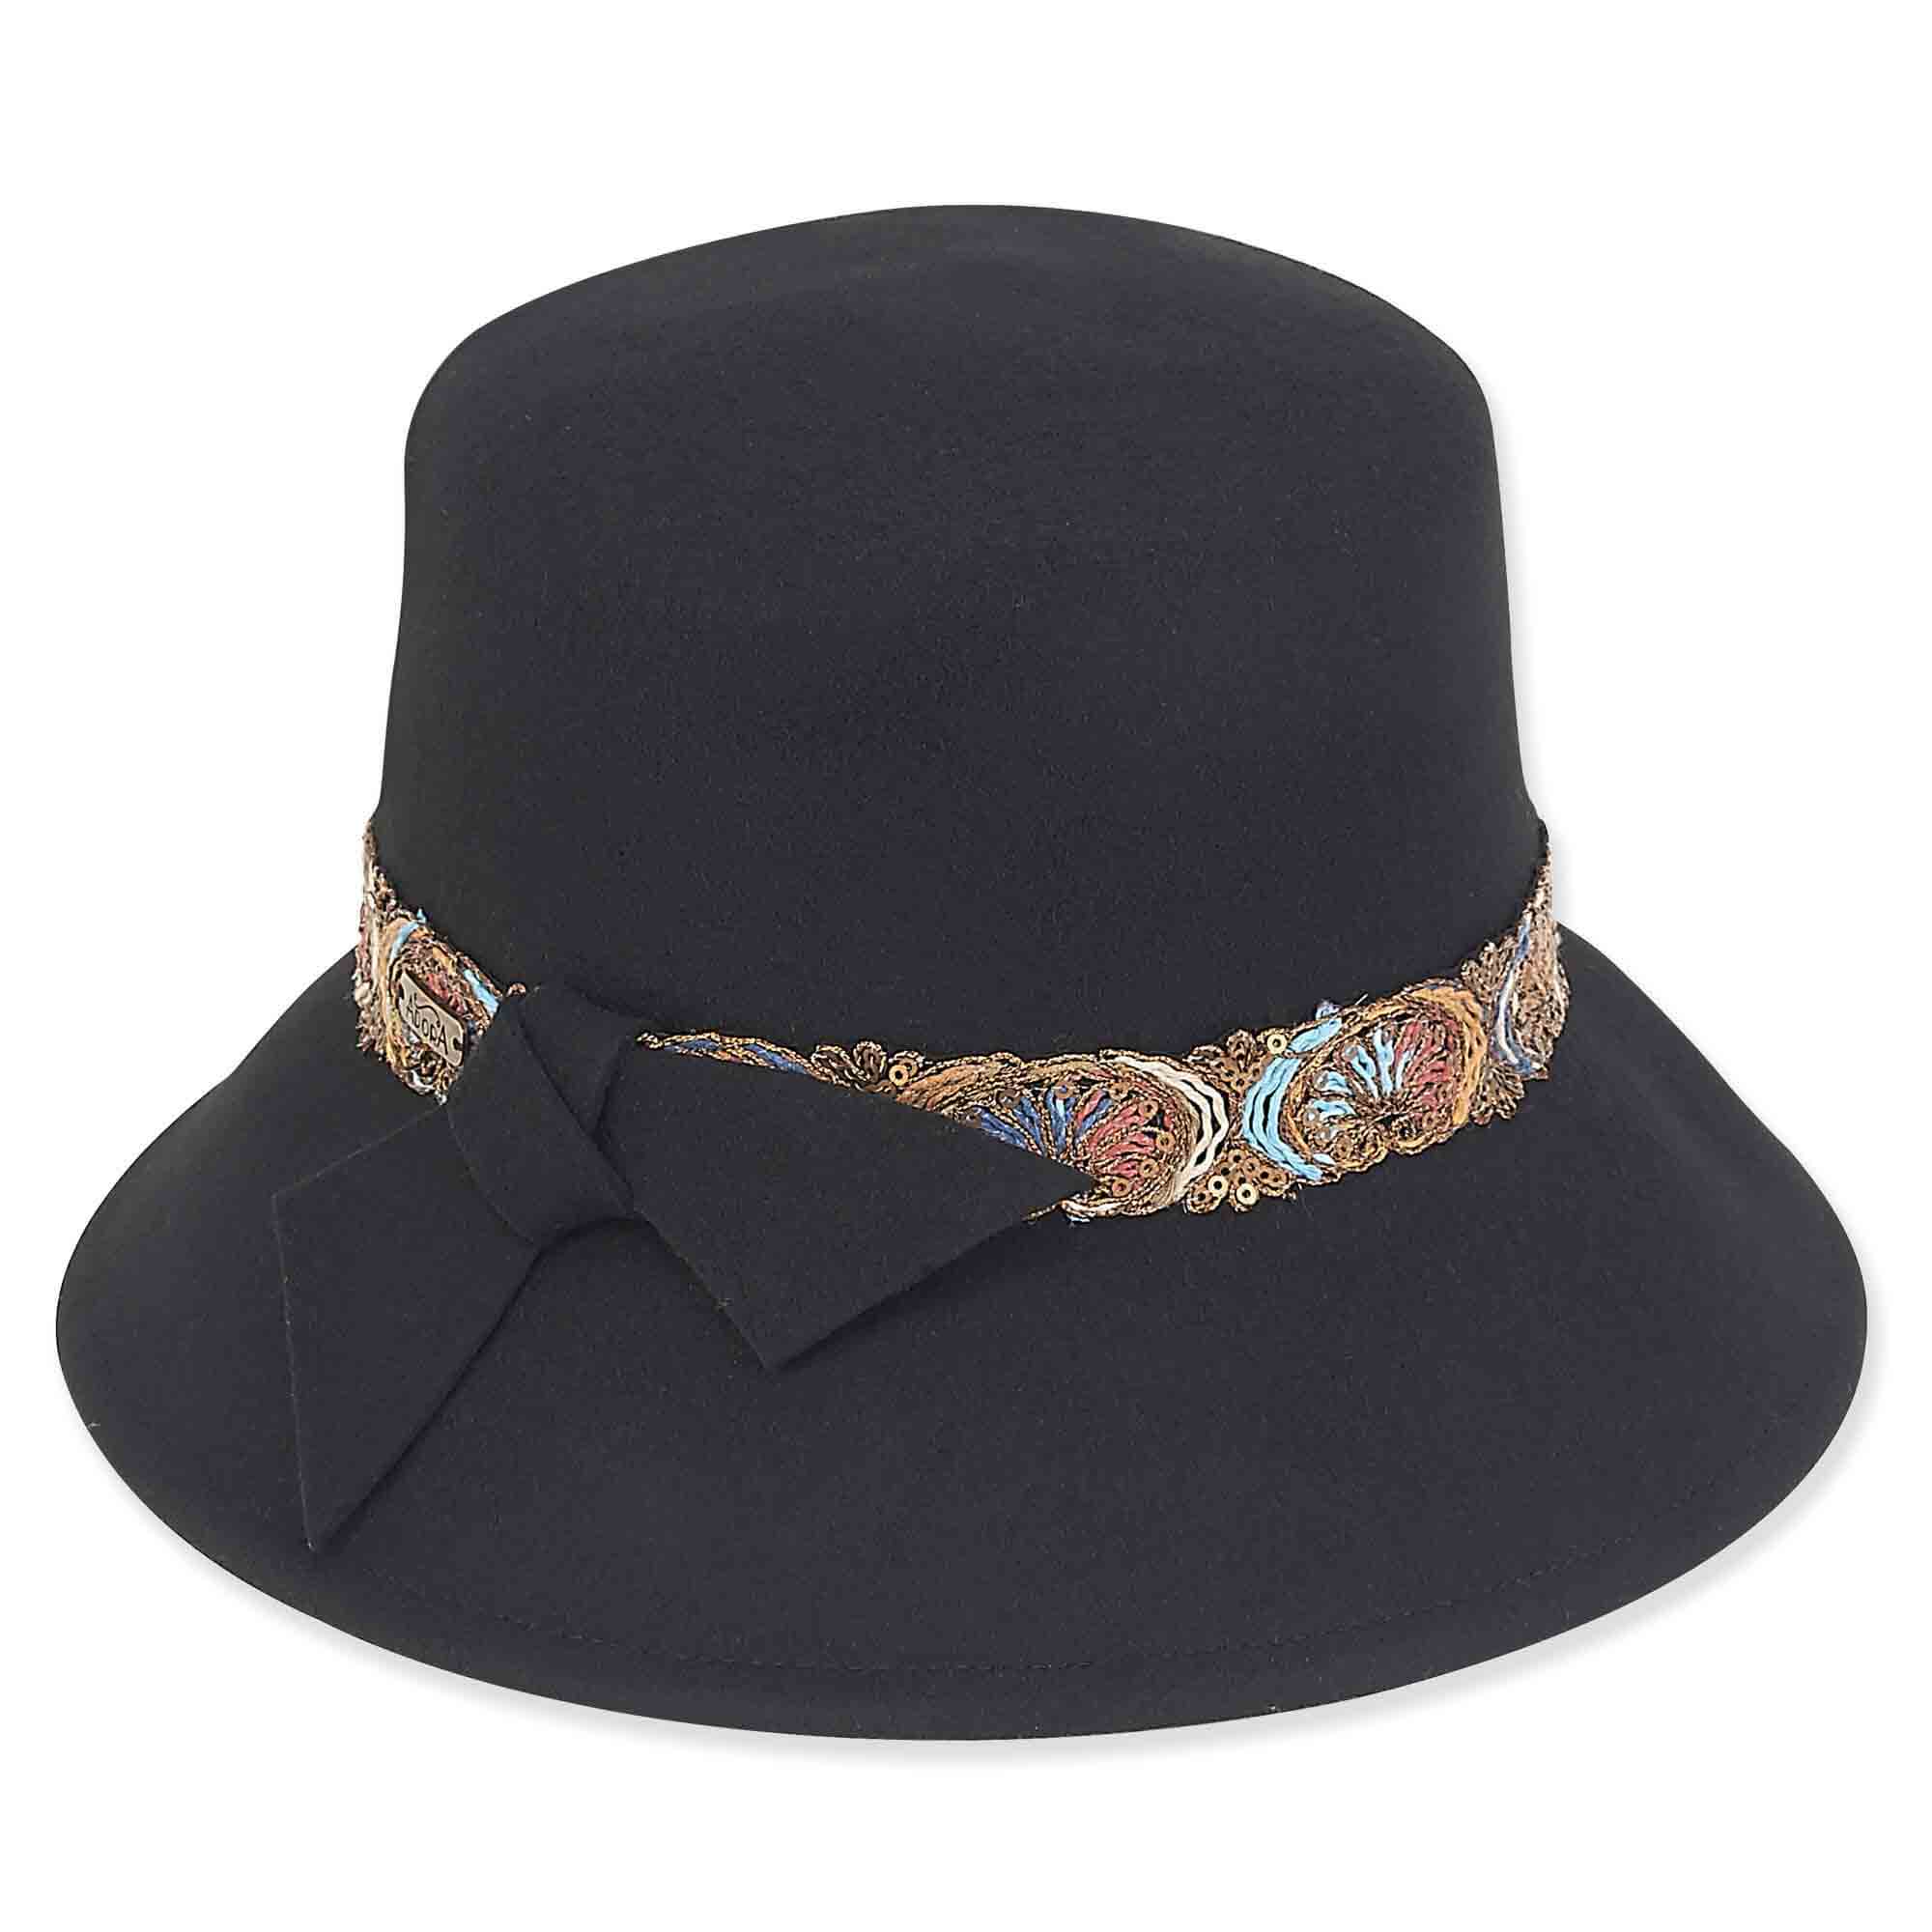 Adora Women's Soft Wool Bucket Contrast Trim Hat